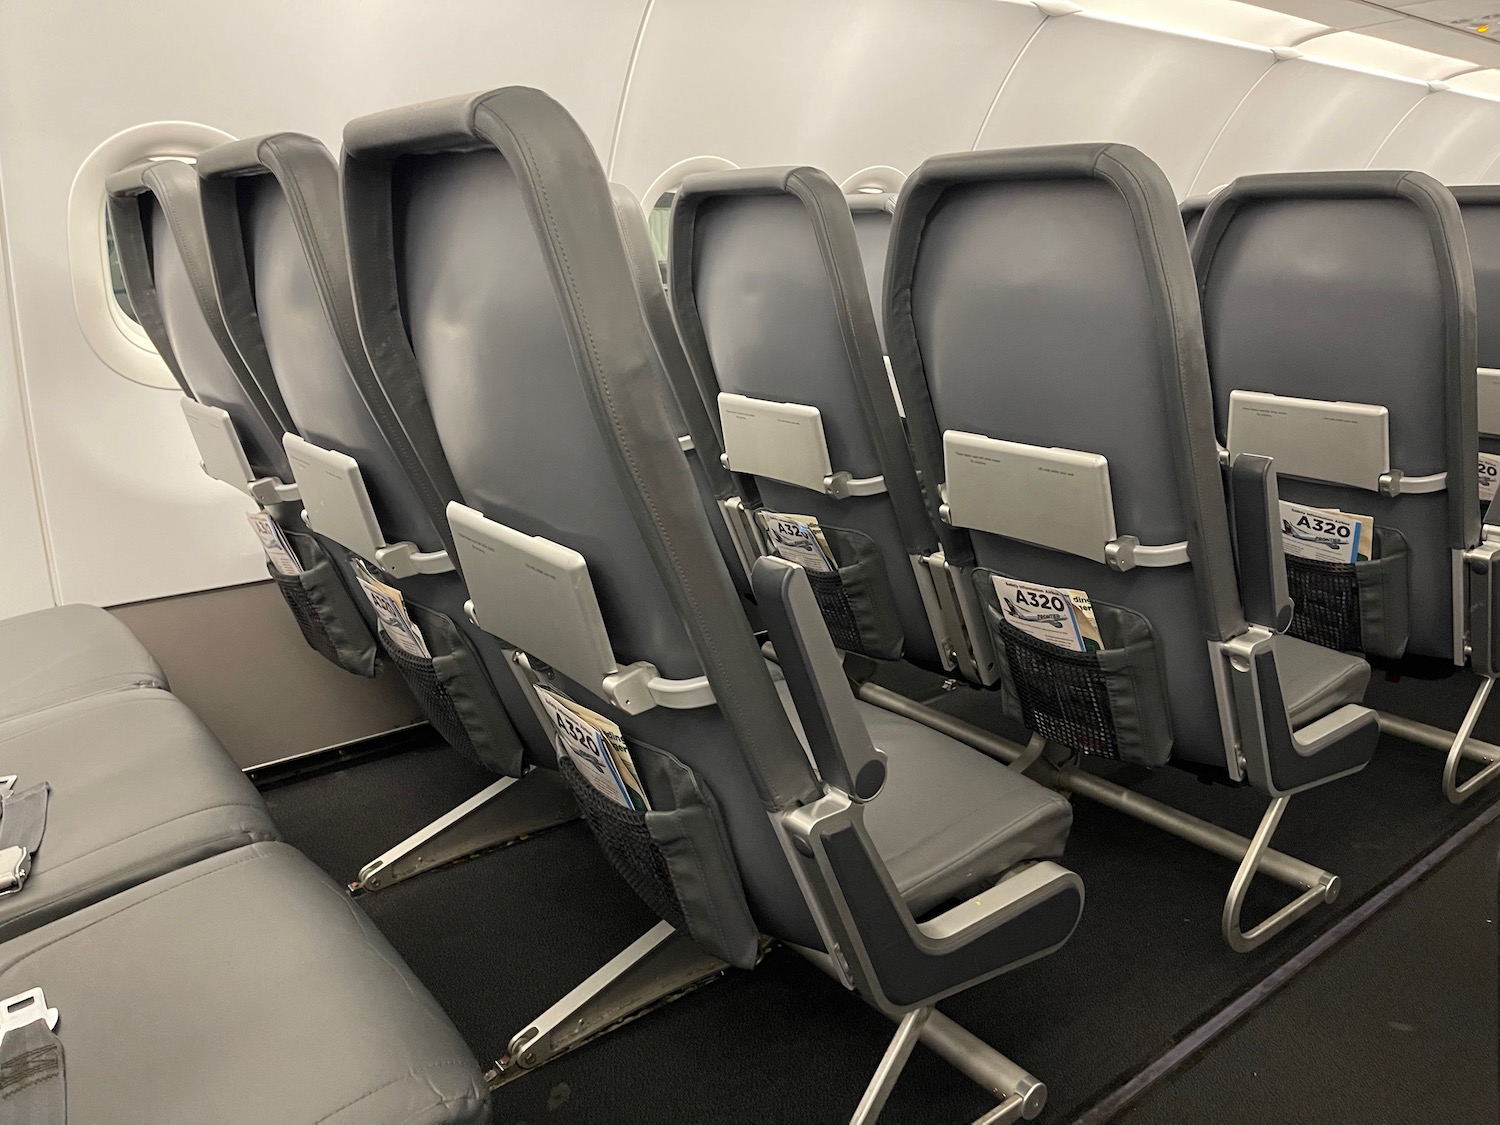 a row of grey seats